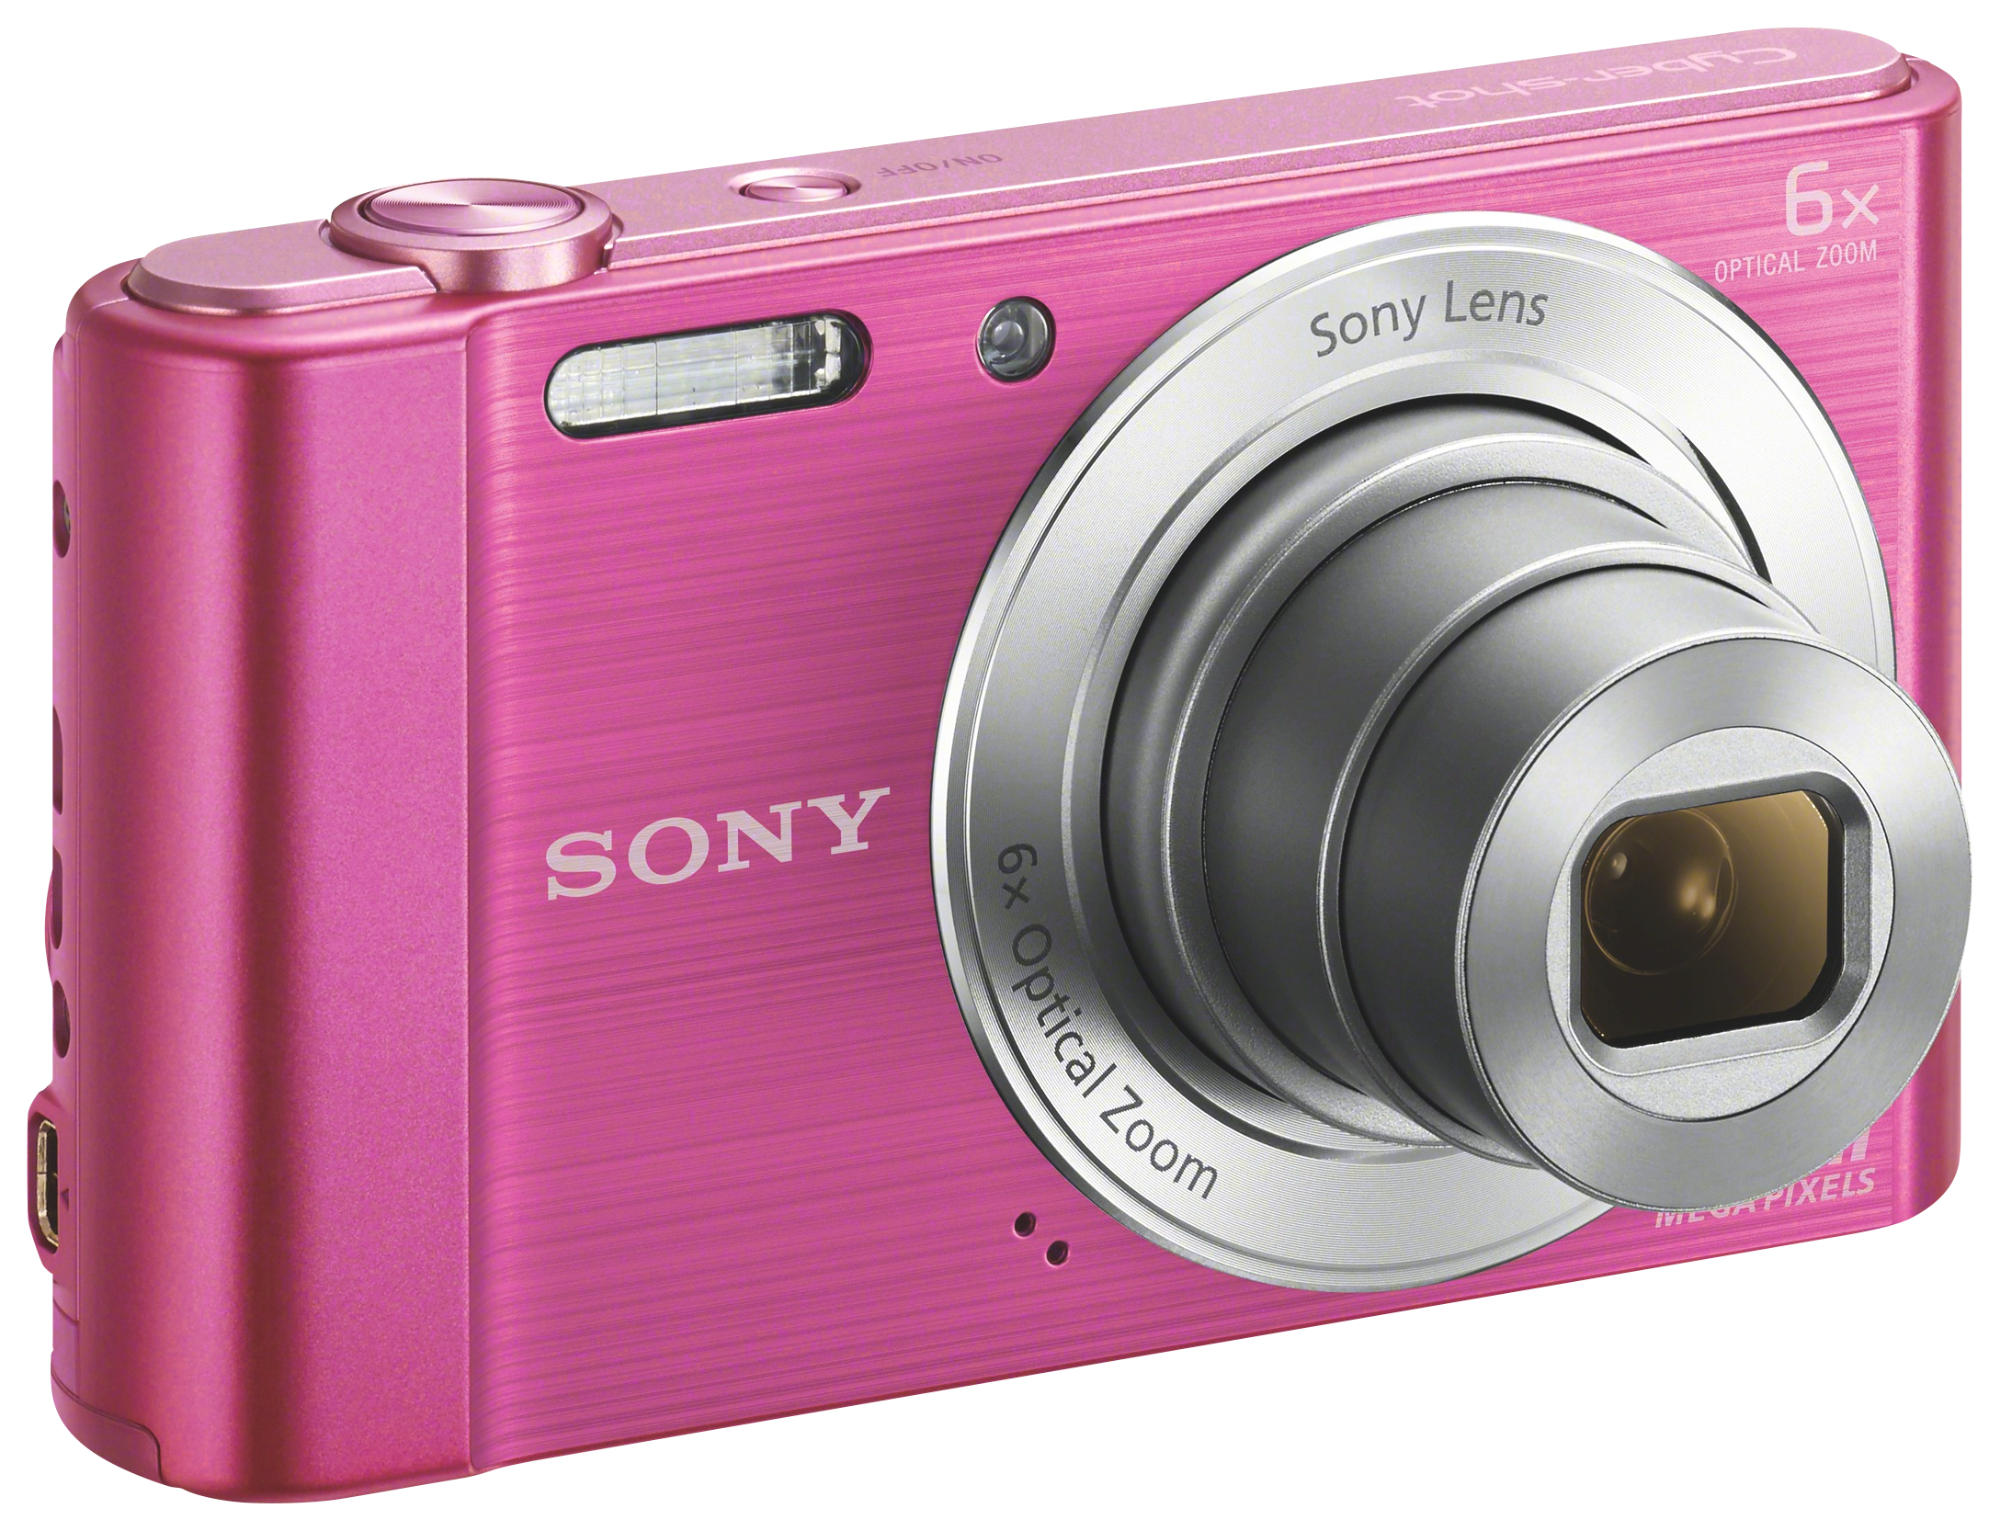 Cámara Compacta Sony dscw810 rosa camara digital w810 20.1mpx dscw810p de 20.1 pantalla 2.7 zoom 6x estabilizador cybershot pk 100 3200 201